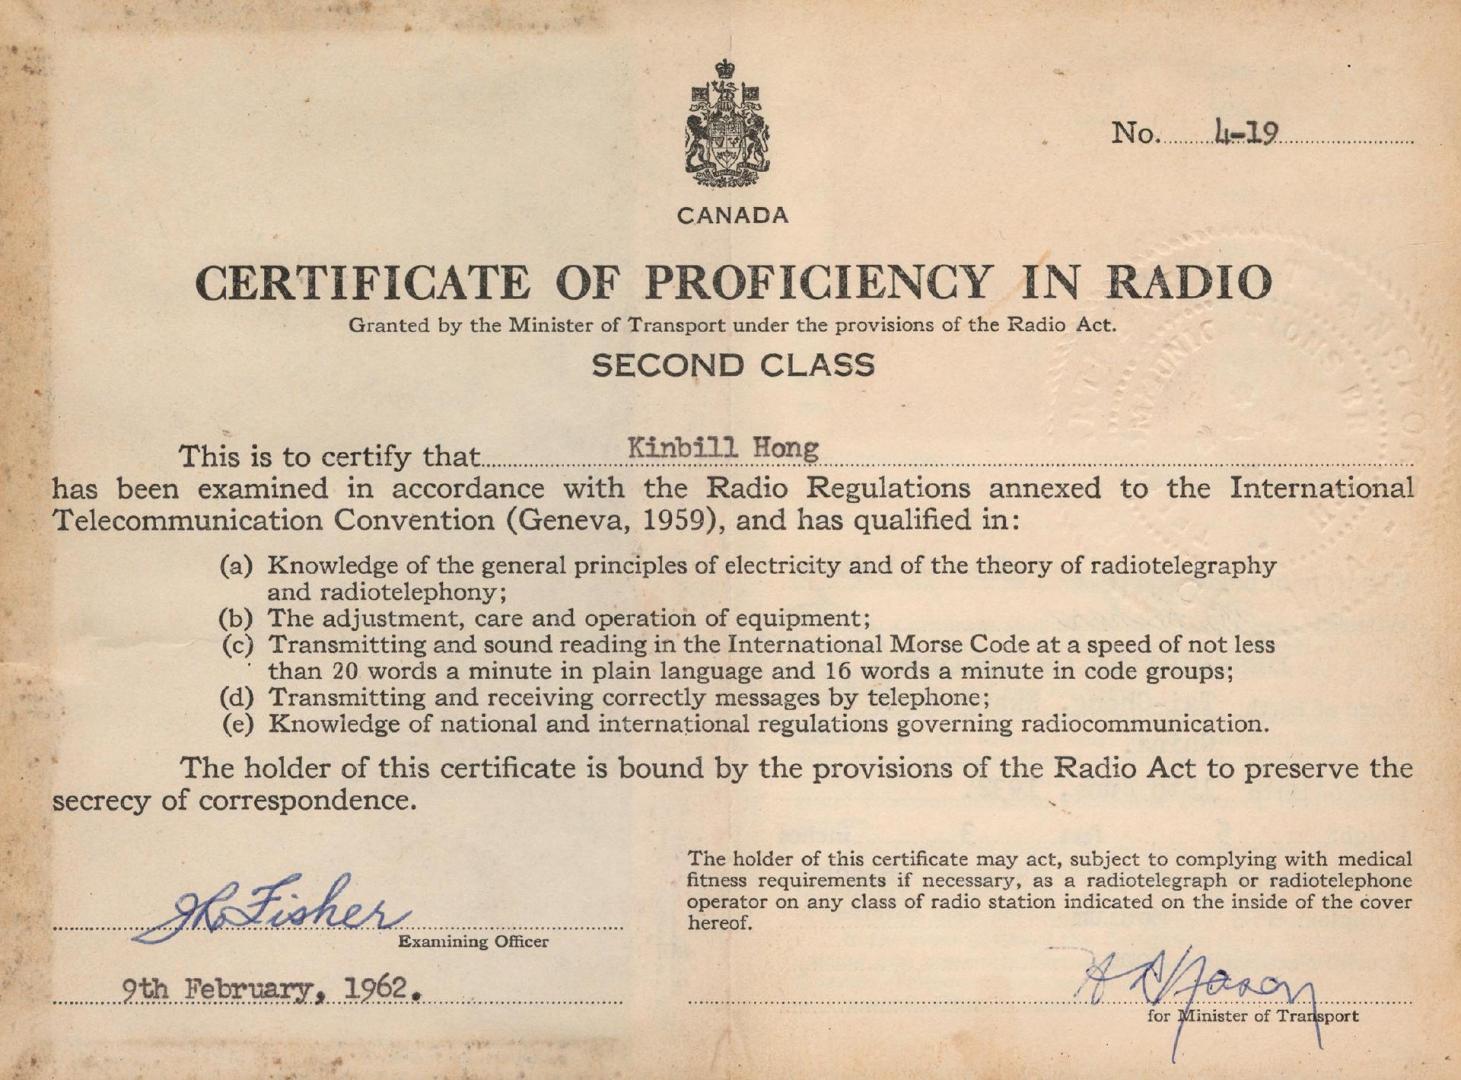 Certificate of proficiency in radio second class - Kinbill Hong